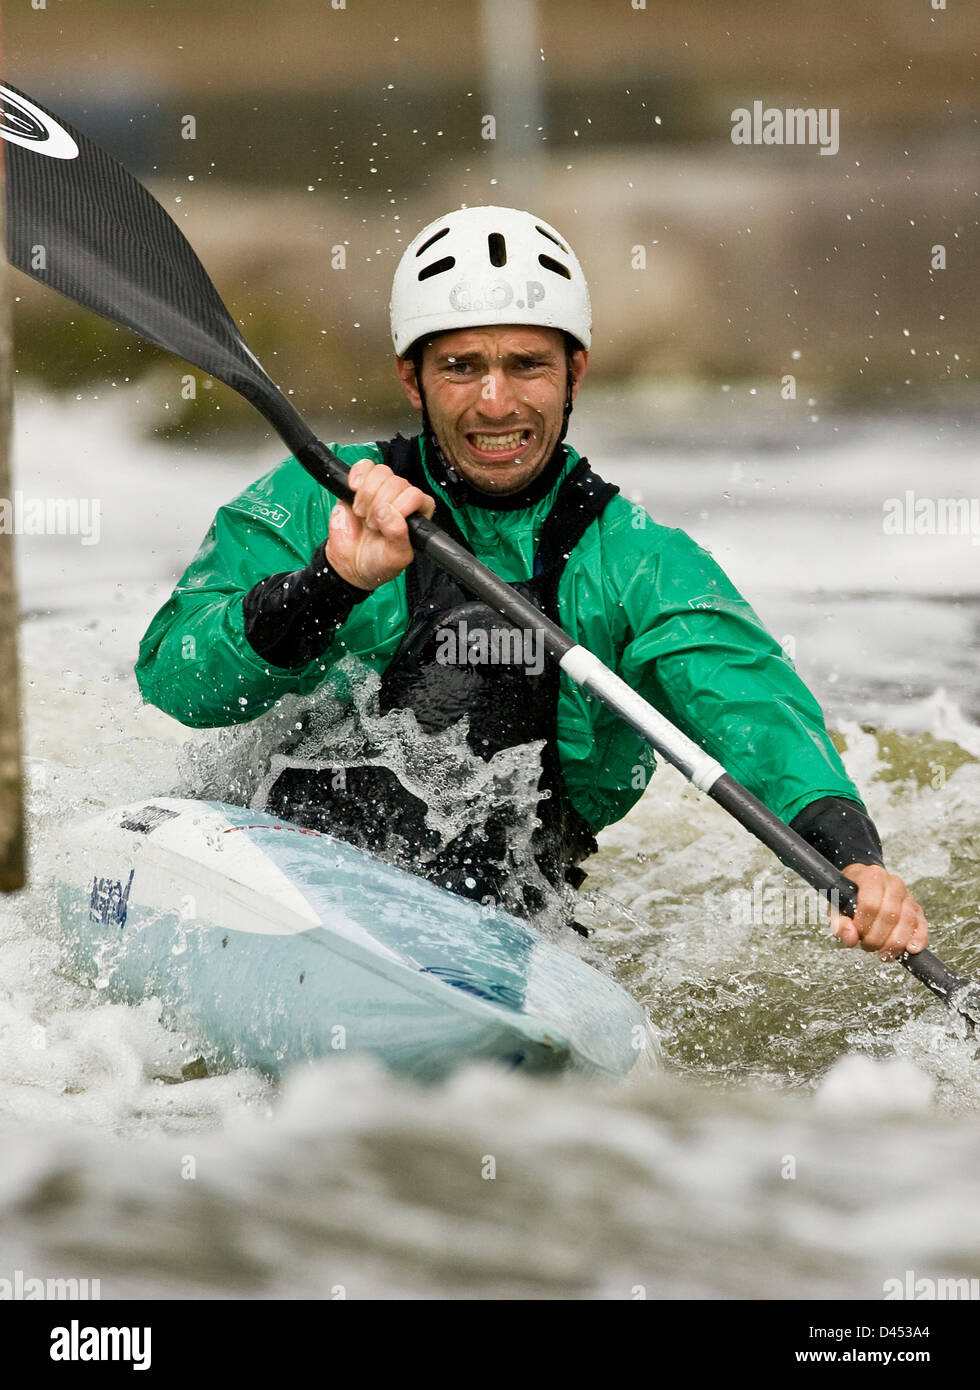 Hombre remando en canoa con esfuerzo en Río fluyendo Foto de stock